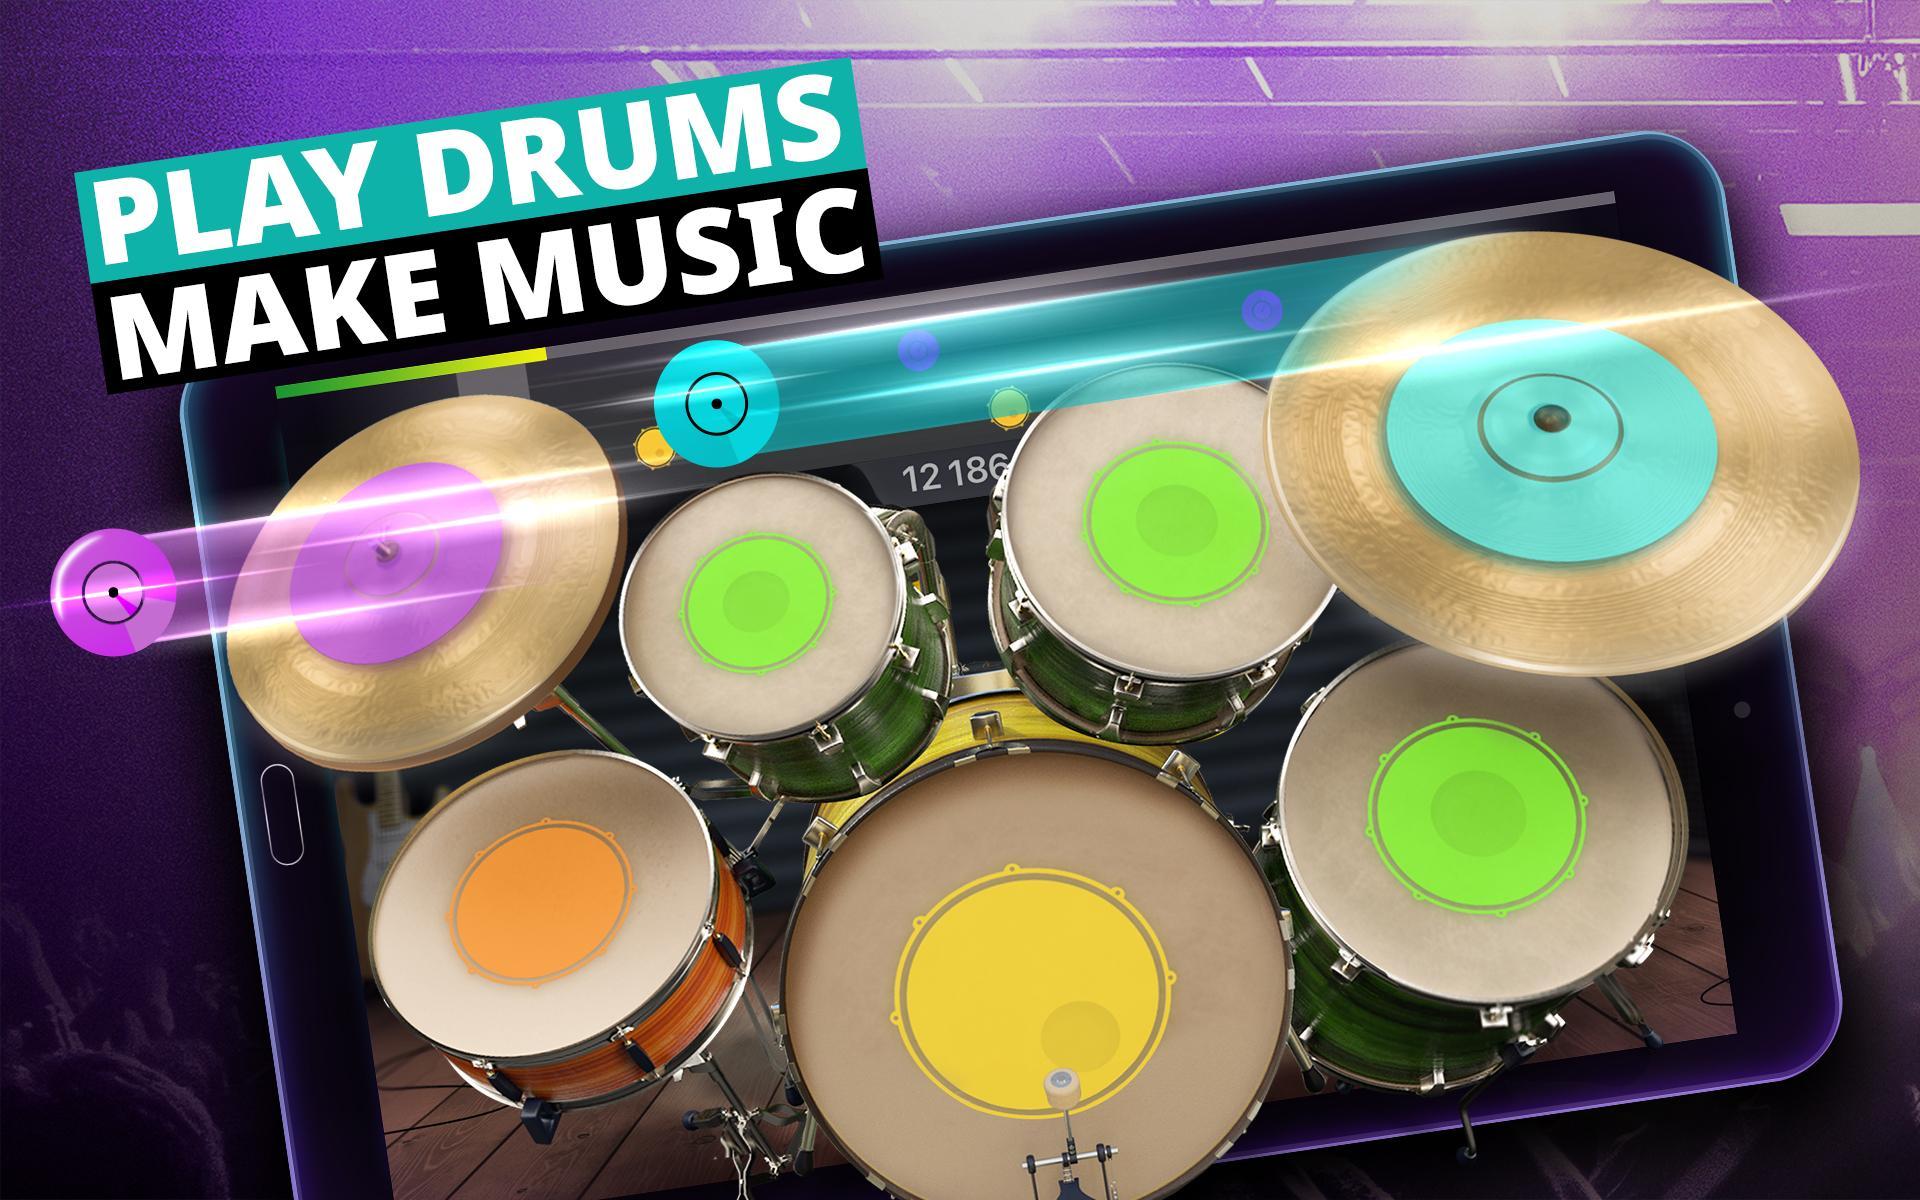 Drum Set Music Games & Drums Kit Simulator 3.36.0 Screenshot 9